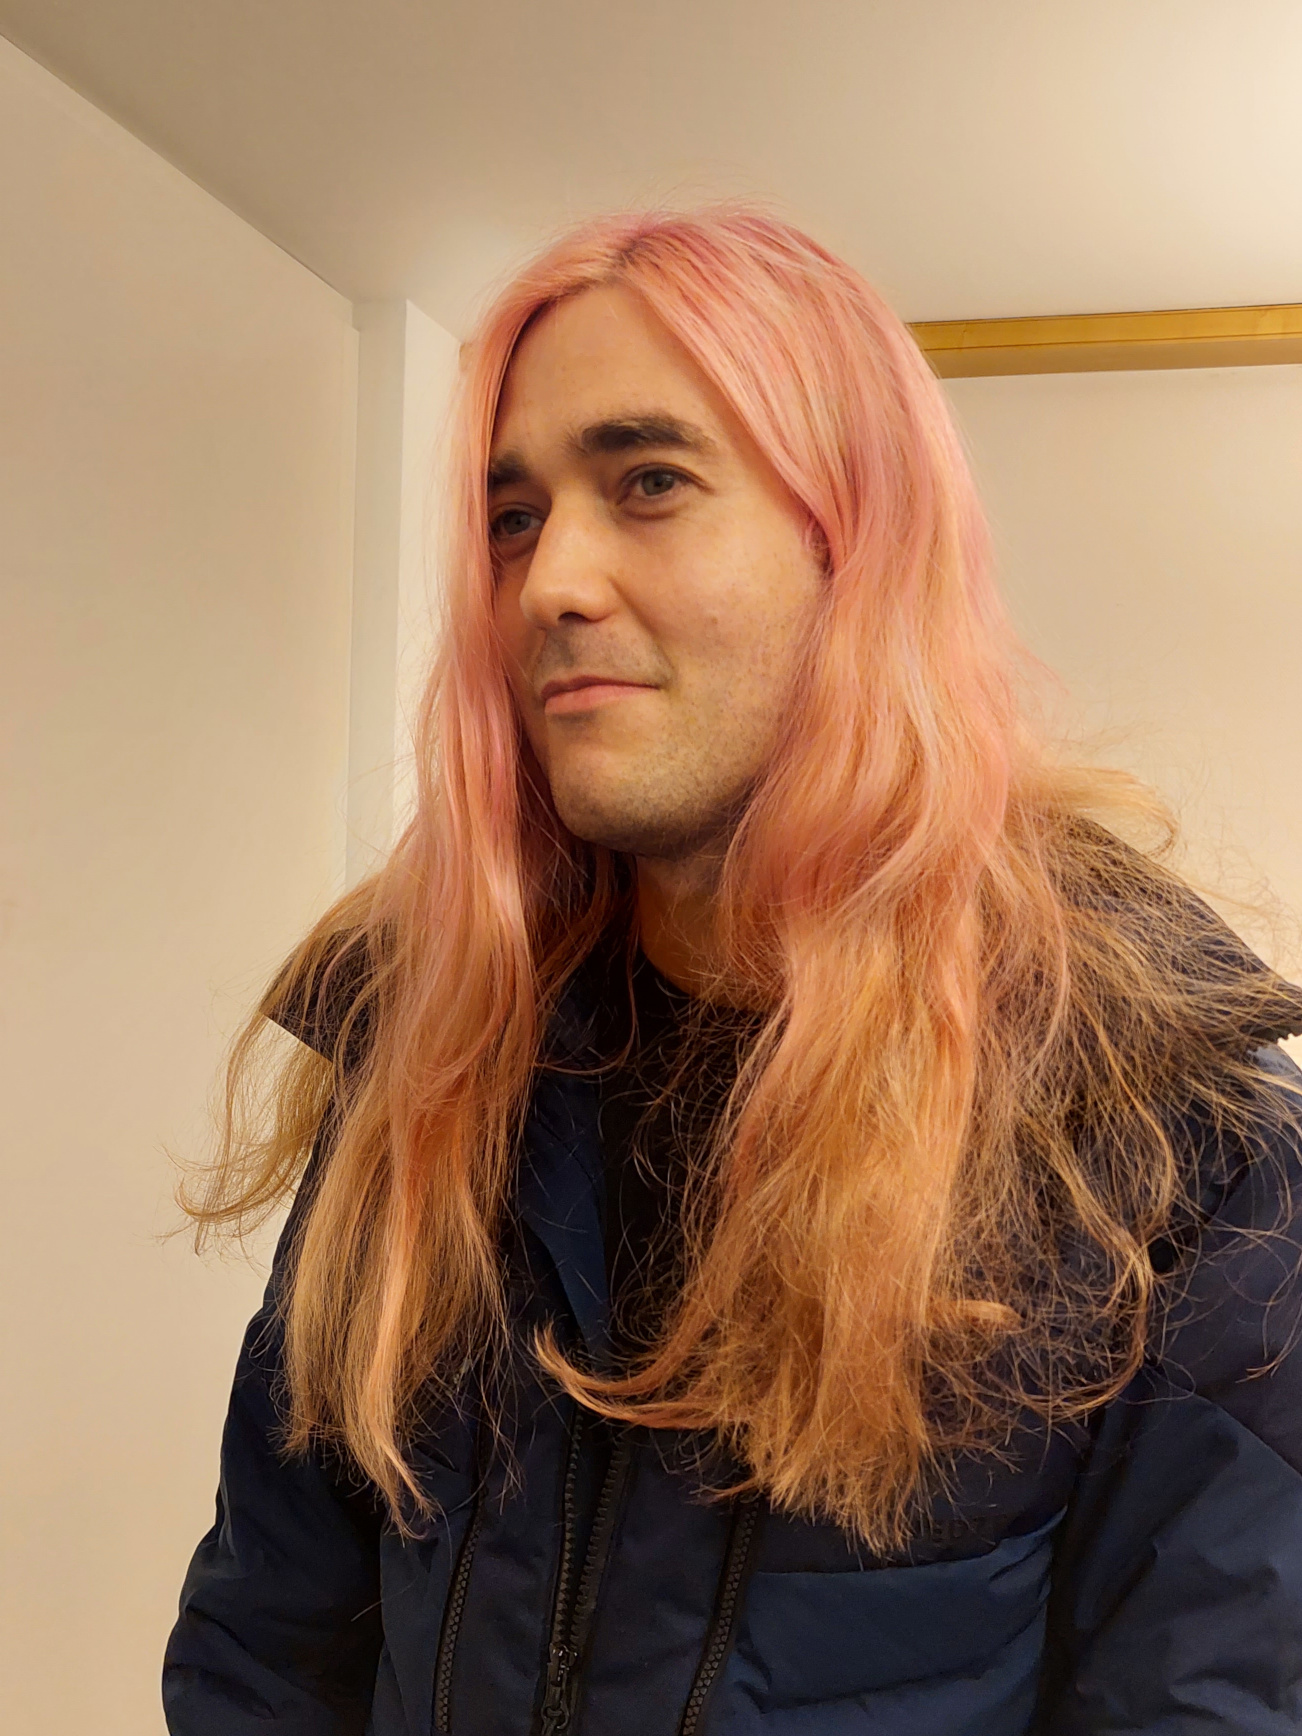 Image of Alex Bishop with pink hair